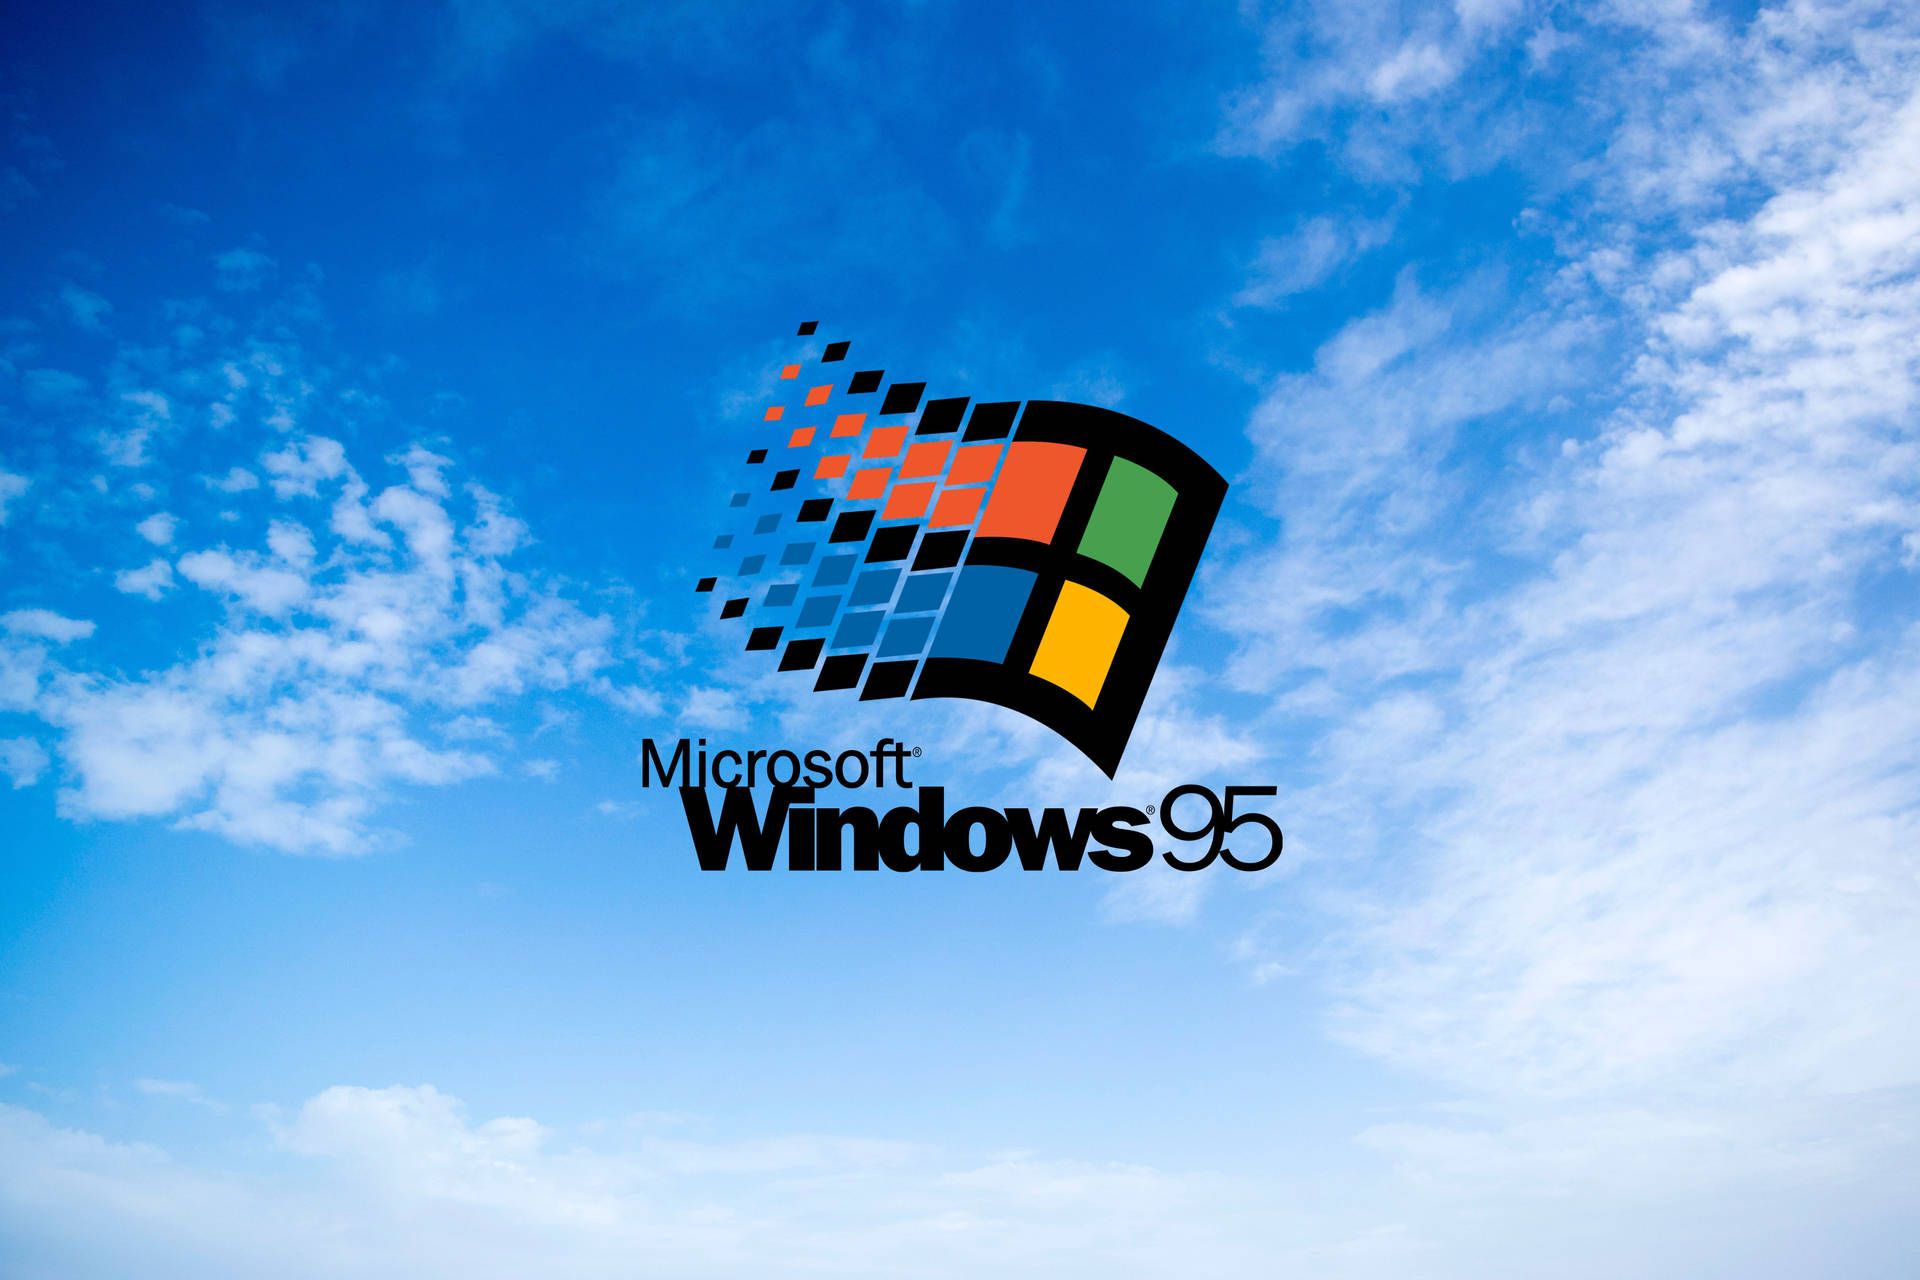 Free Windows 95 Wallpaper Downloads, Windows 95 Wallpaper for FREE